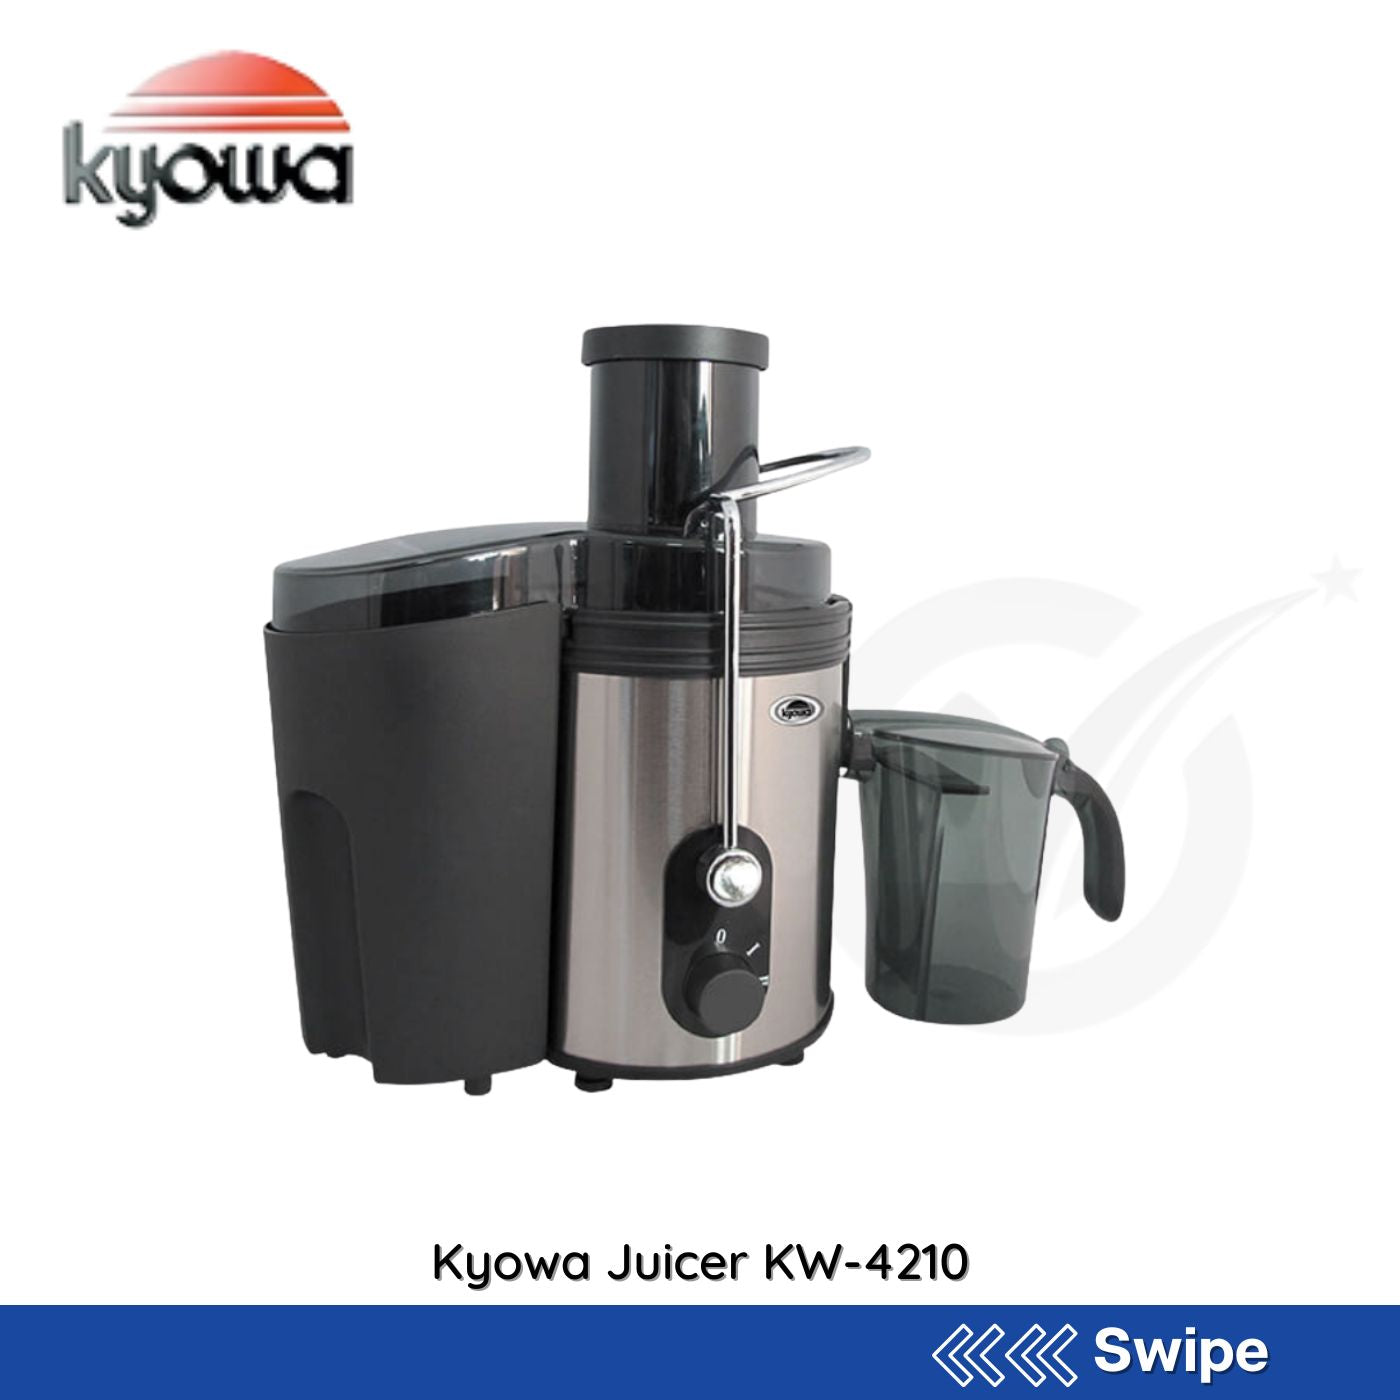 Kyowa Juicer KW-4210 - People's Choice Marketing